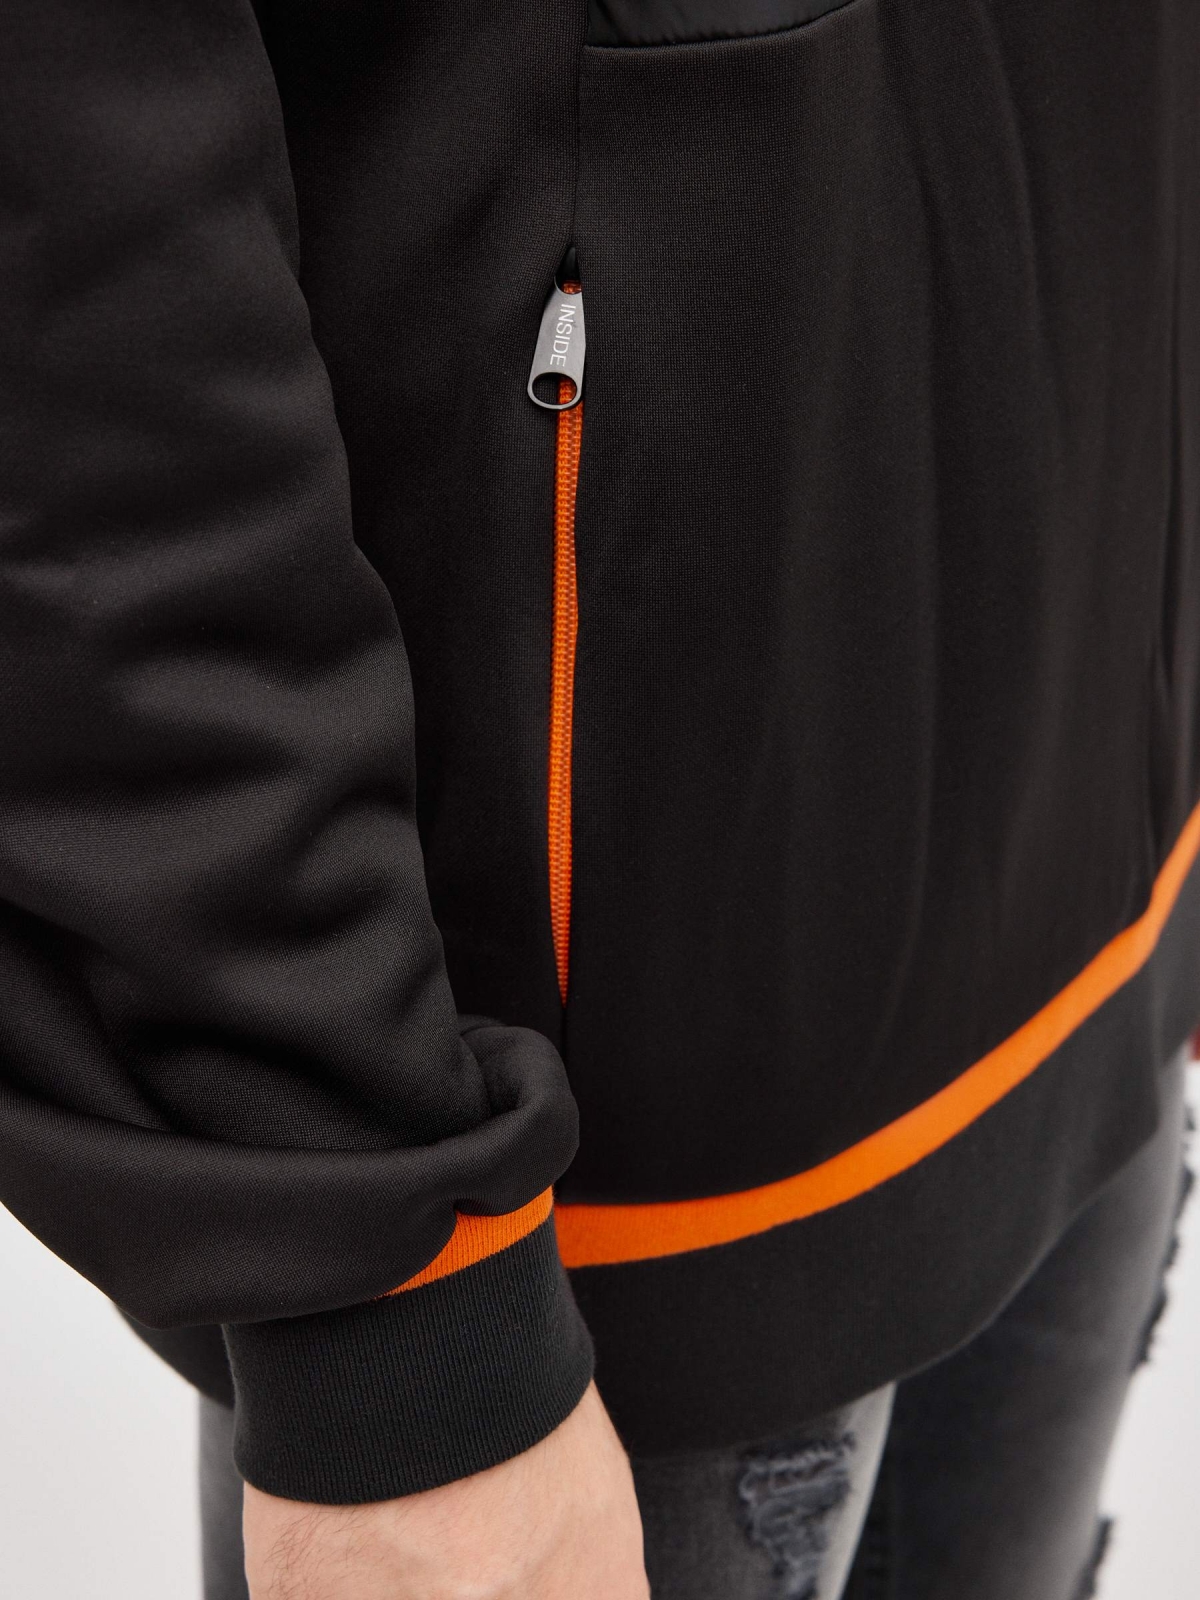 Sweatshirt com capuz semicerrada preto vista detalhe